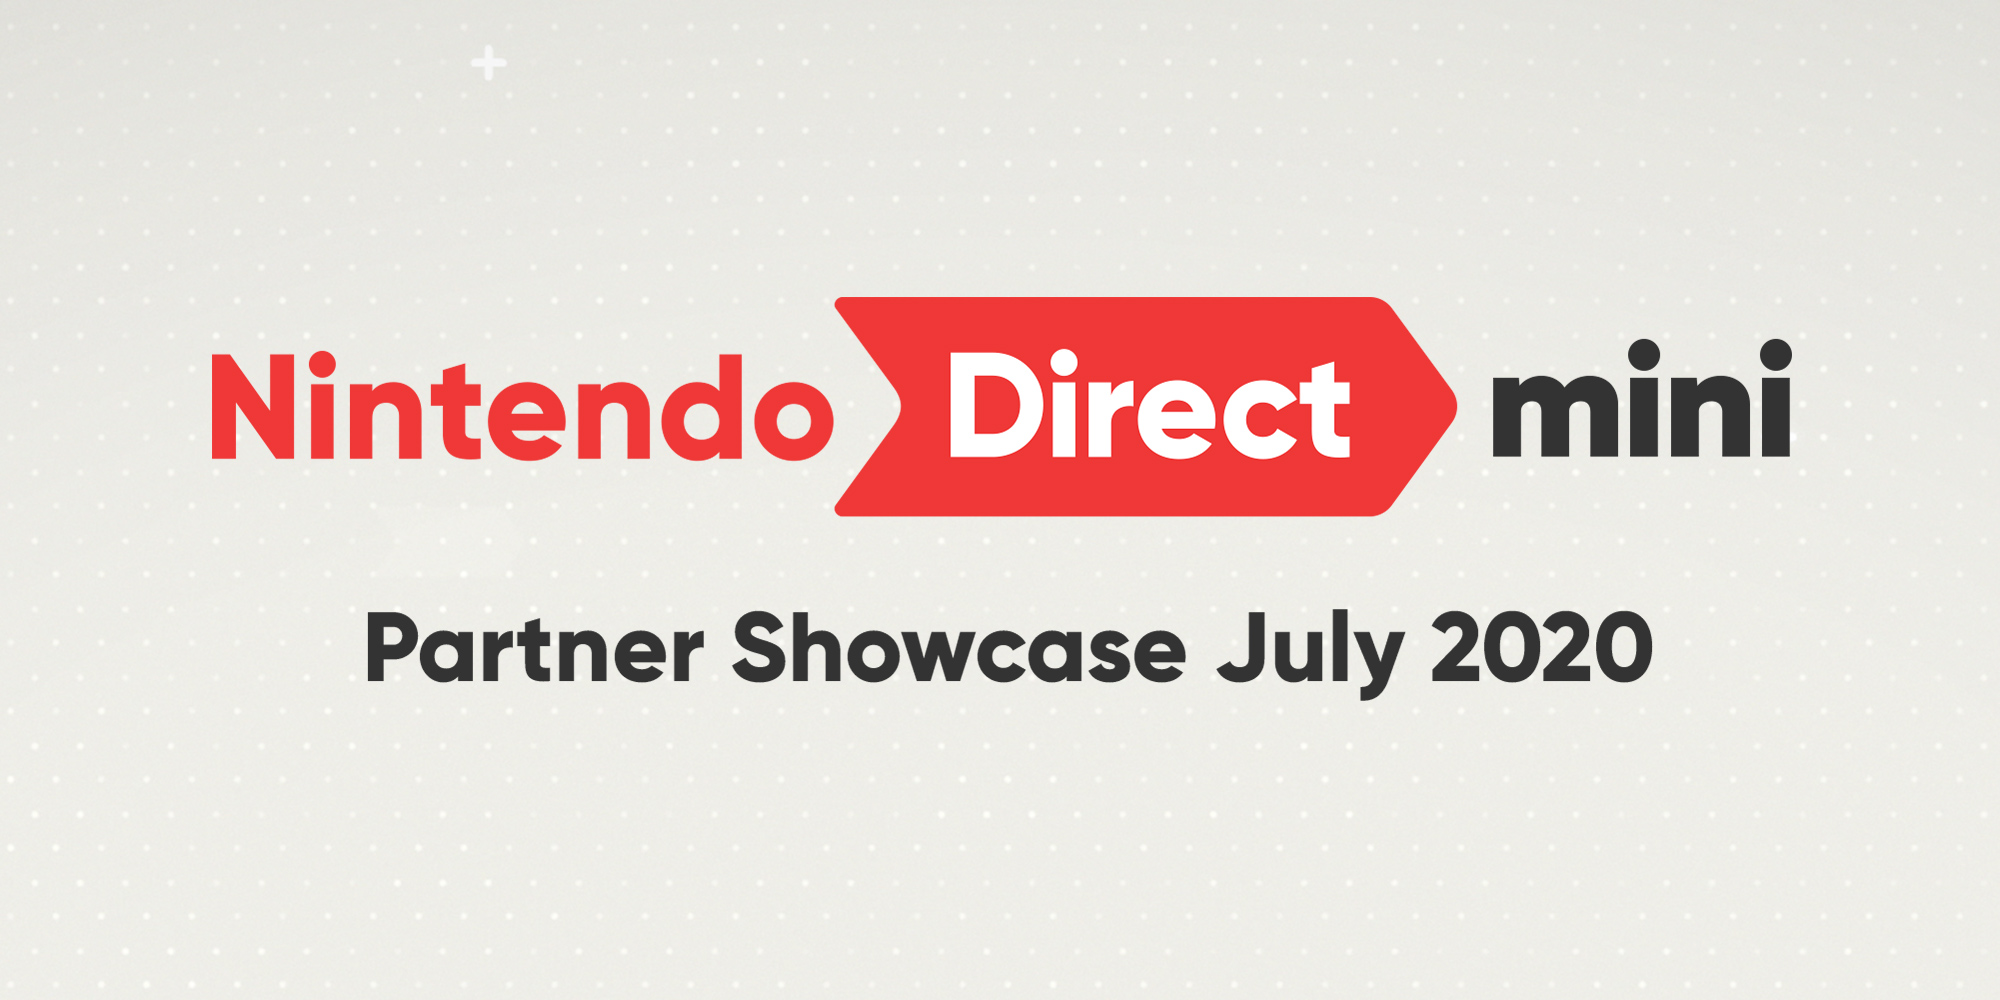 Direct Mini: Partner Showcase 2020 News | Nintendo